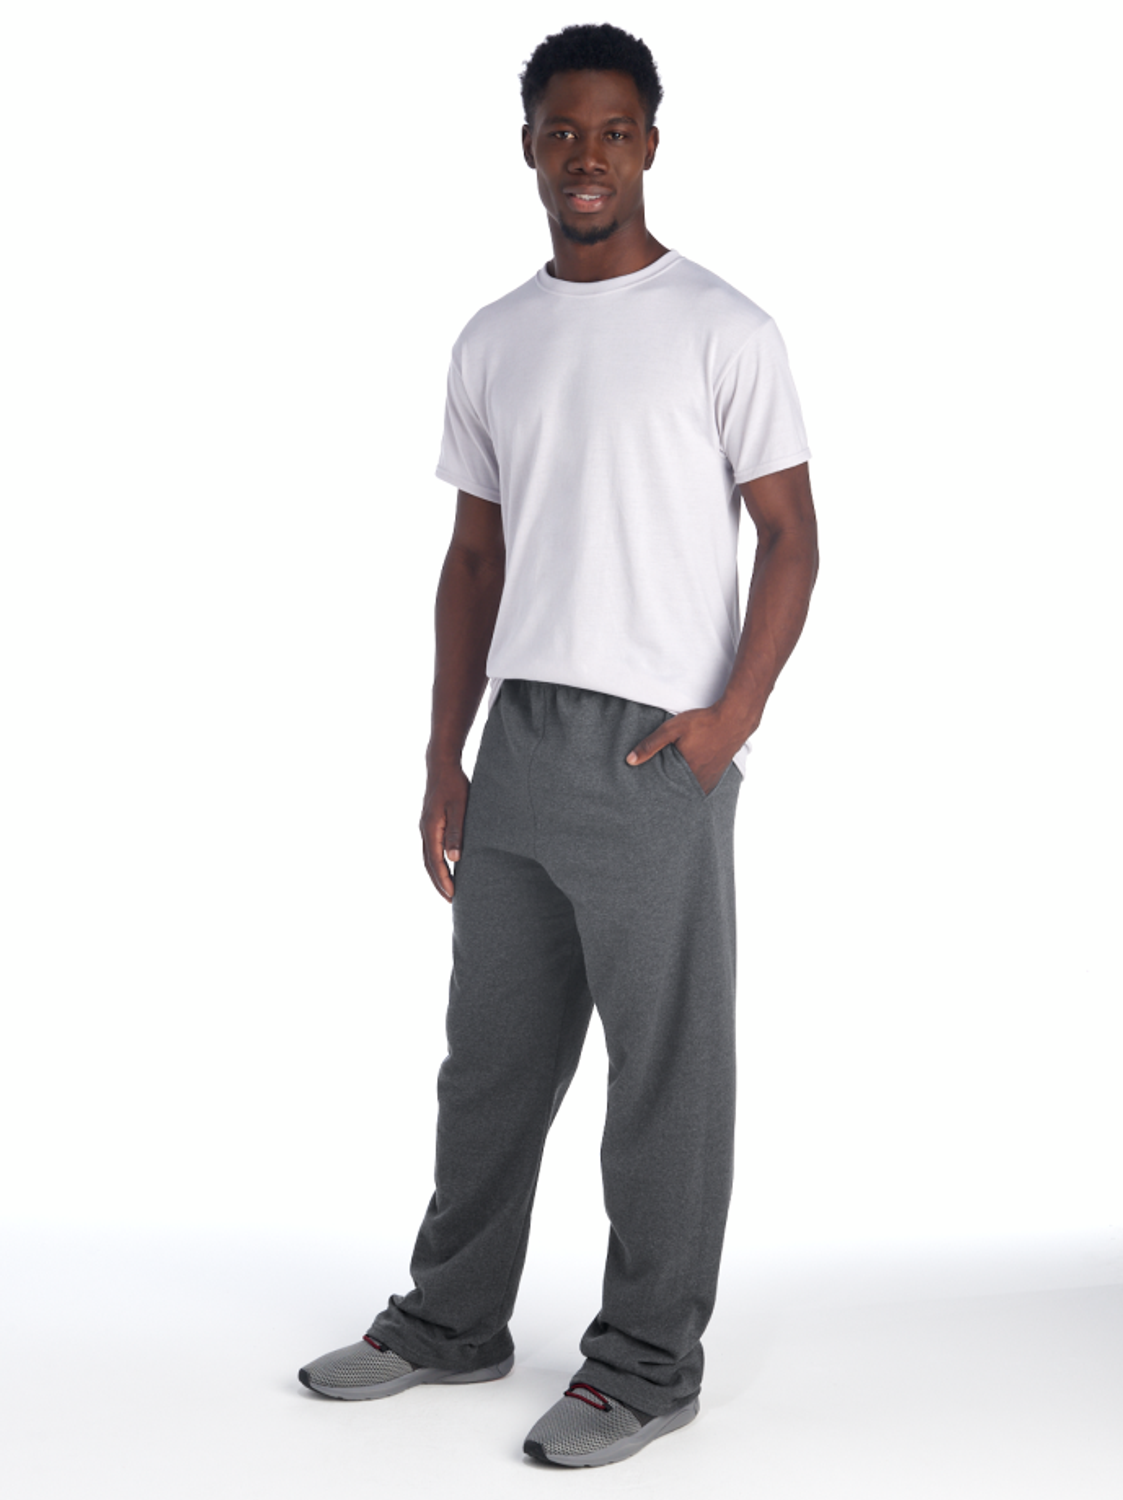 JERZEES 974MPR NuBlend® Open Bottom Sweatpants with Pockets 